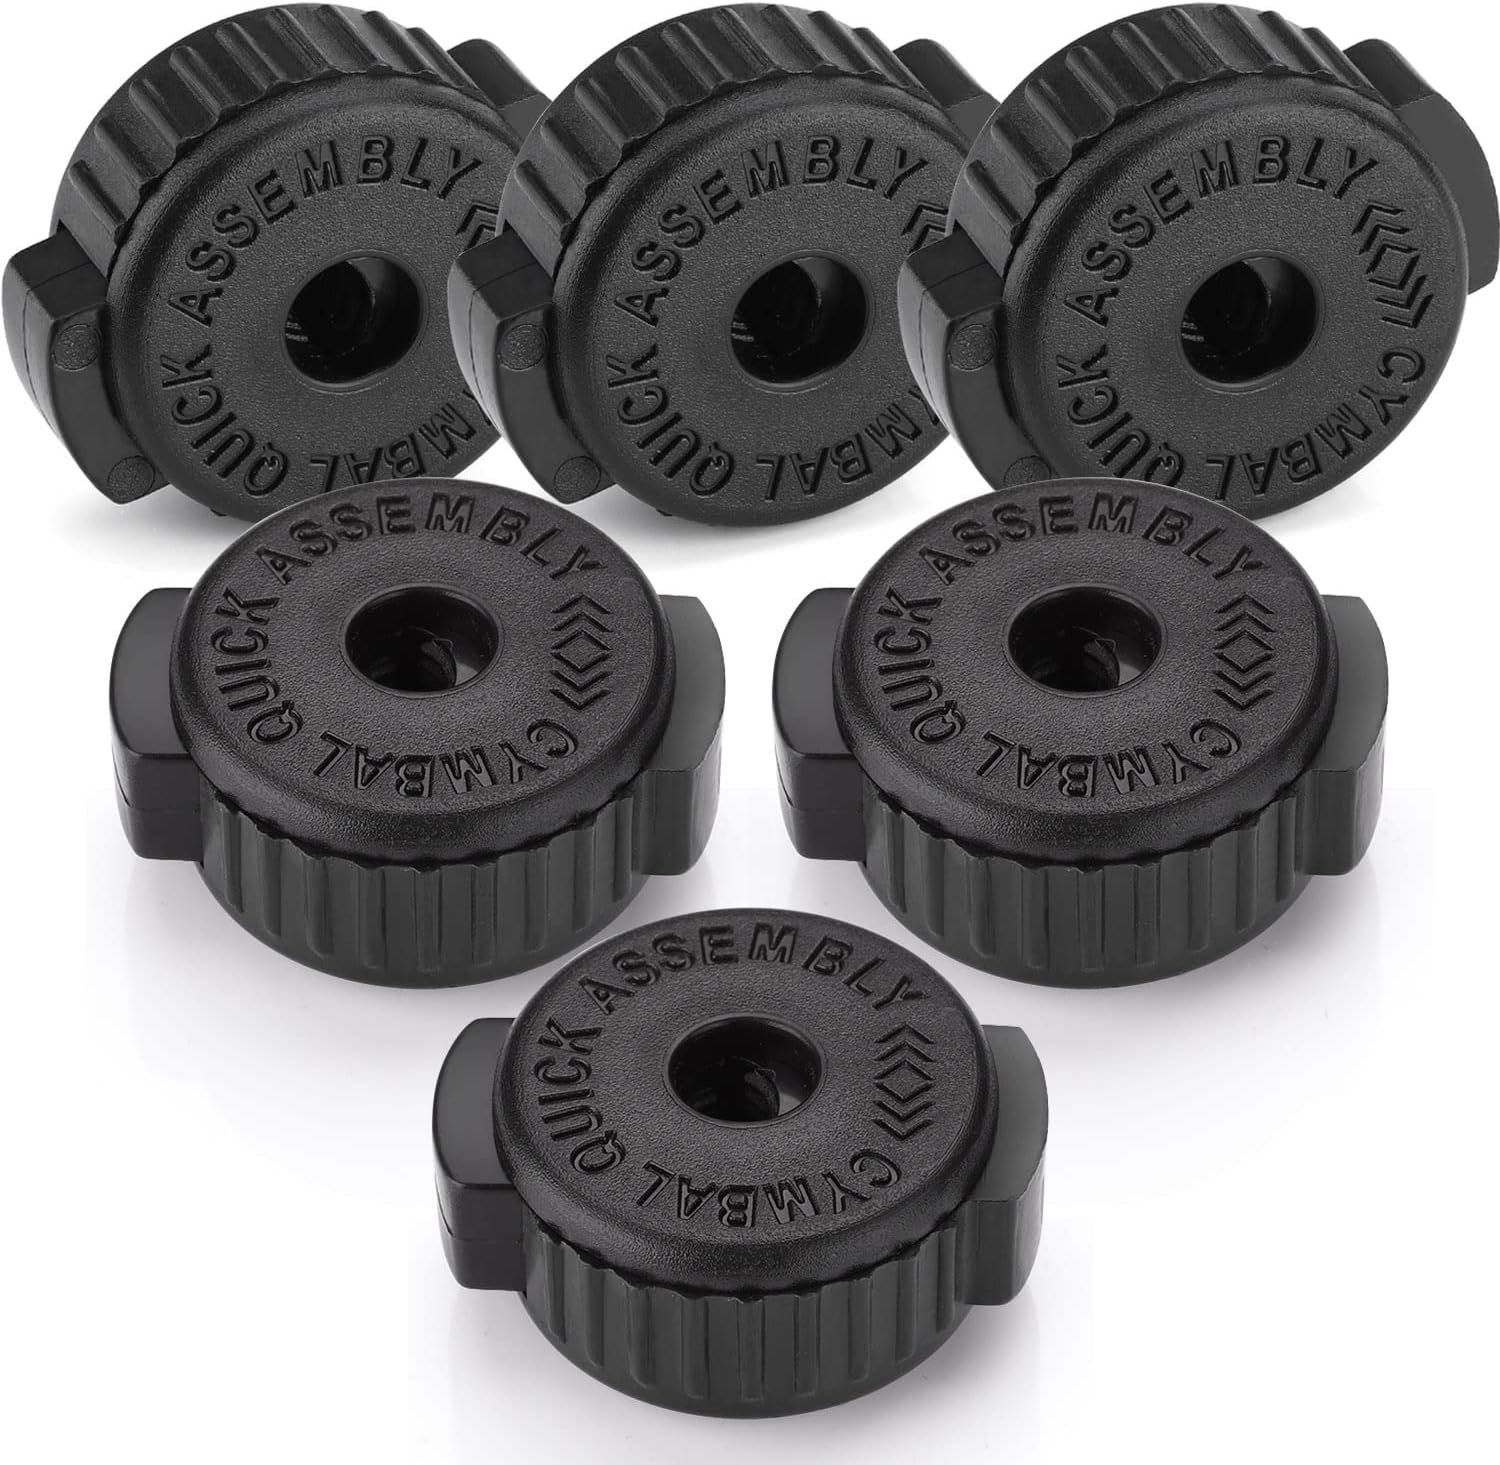 Facmogu 6PCS Black Plastic Cymbal Nuts, 8mm Quick-set Cymbal Nut for Percussion Drum Kit, Quick Release Cymbal Nut  Cymbal Mate for Percussion Replacement Kitparts